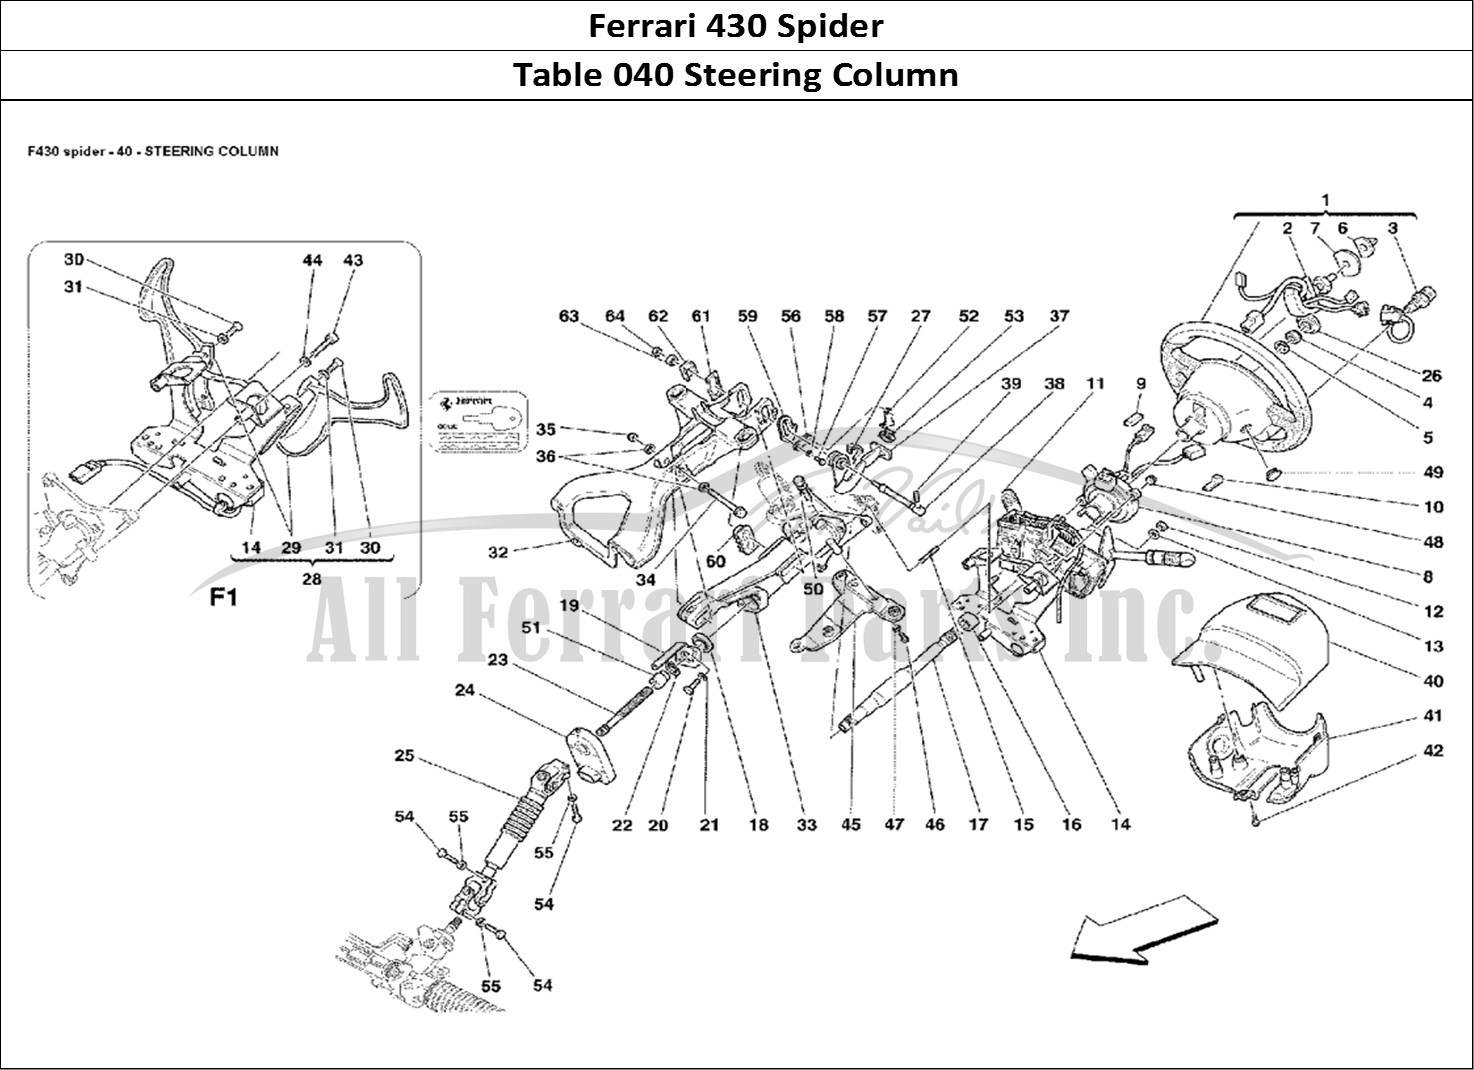 Ferrari Parts Ferrari 430 Spider Page 040 Steering Column